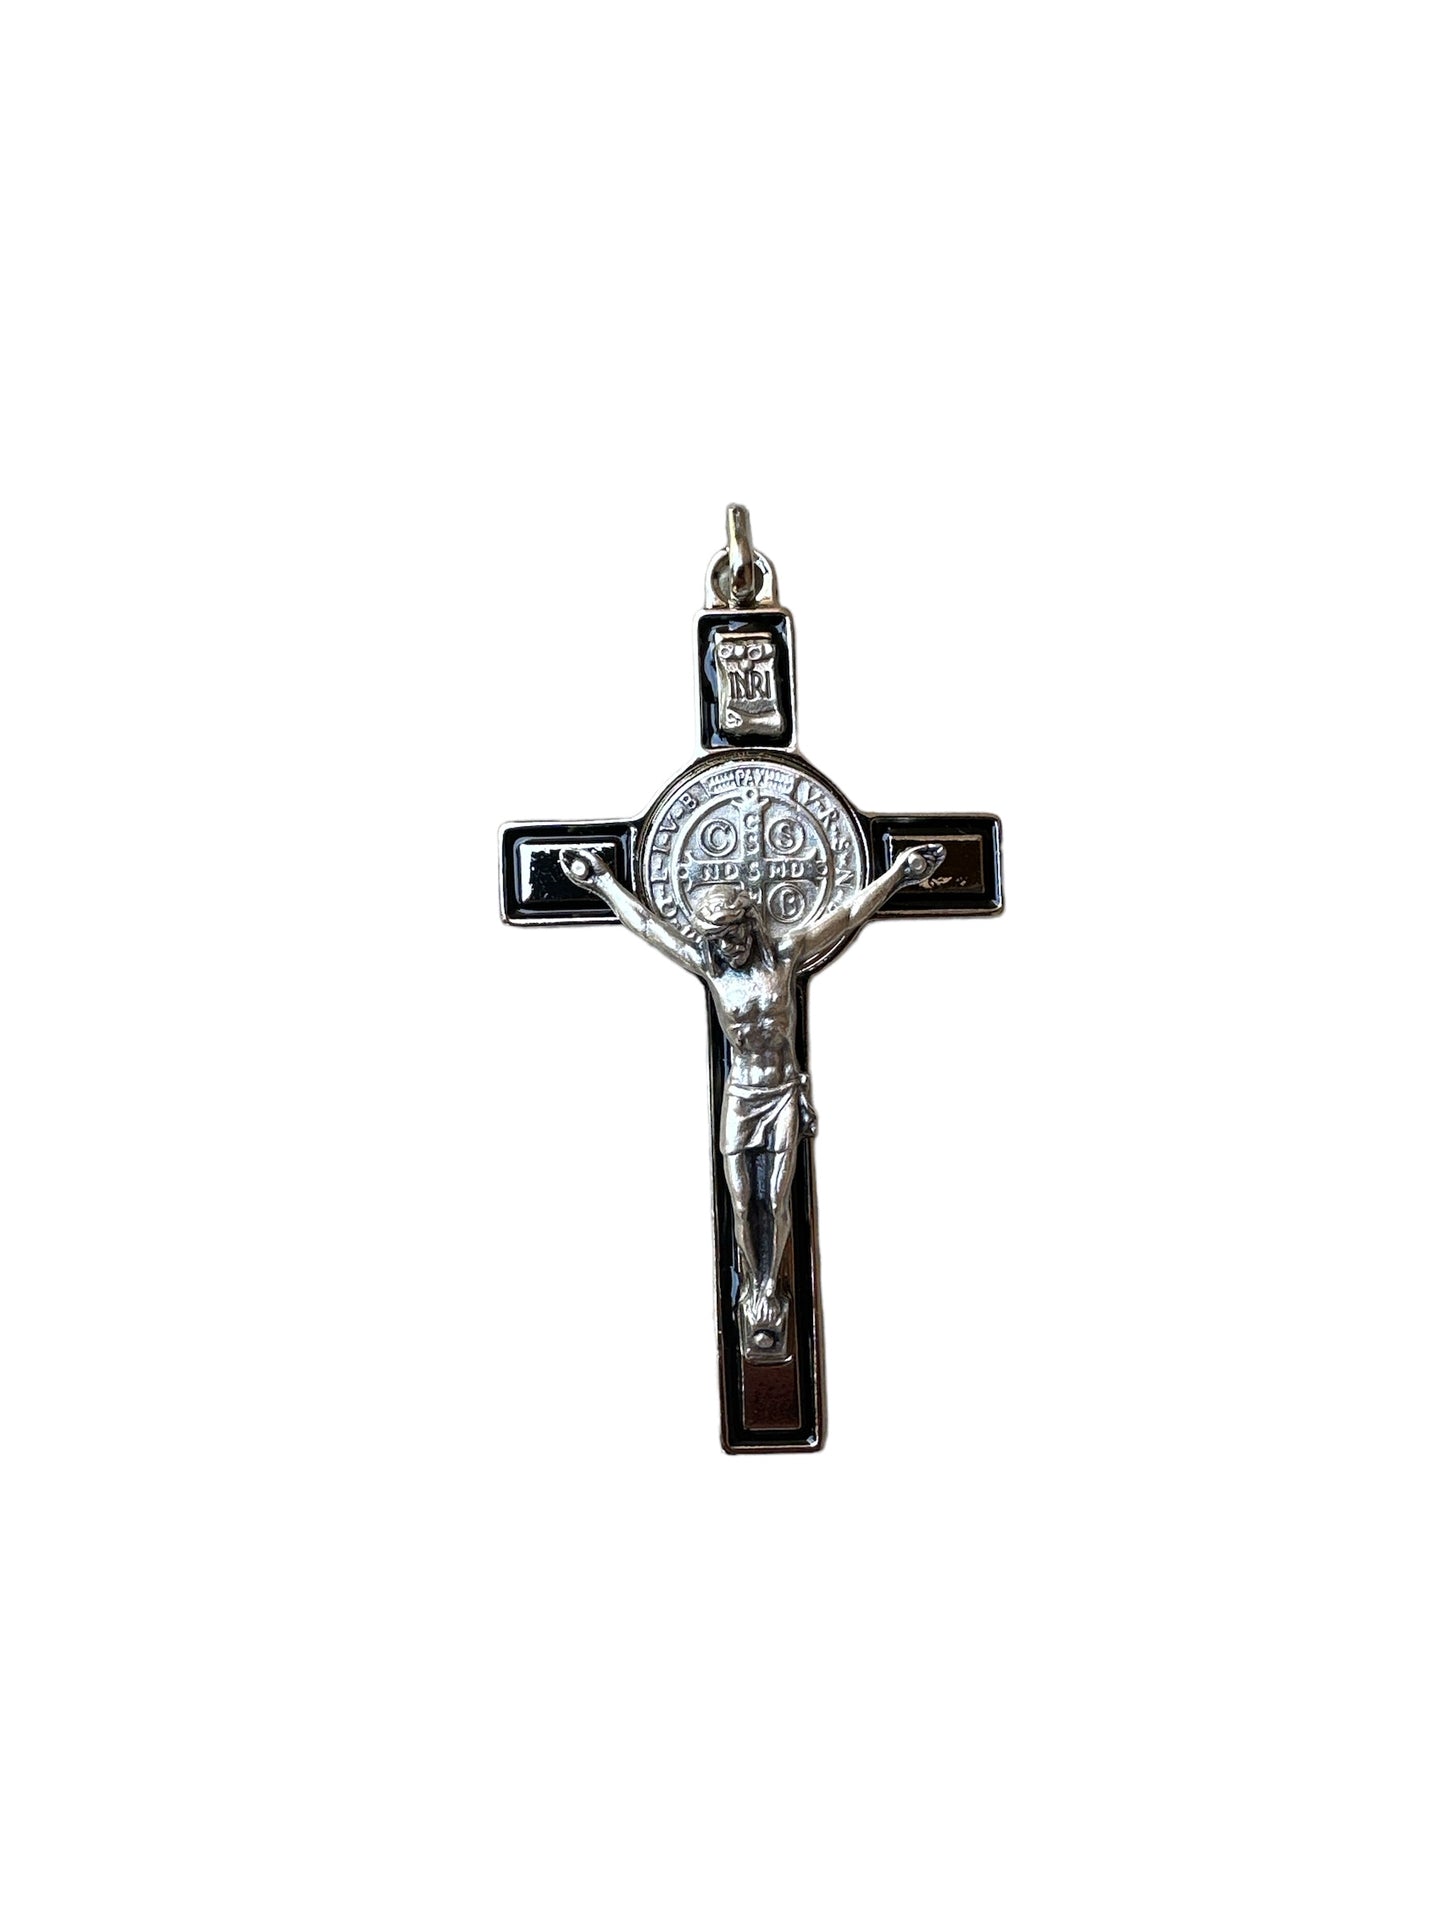 Saint Benedict Crucifix Silver/Black Color